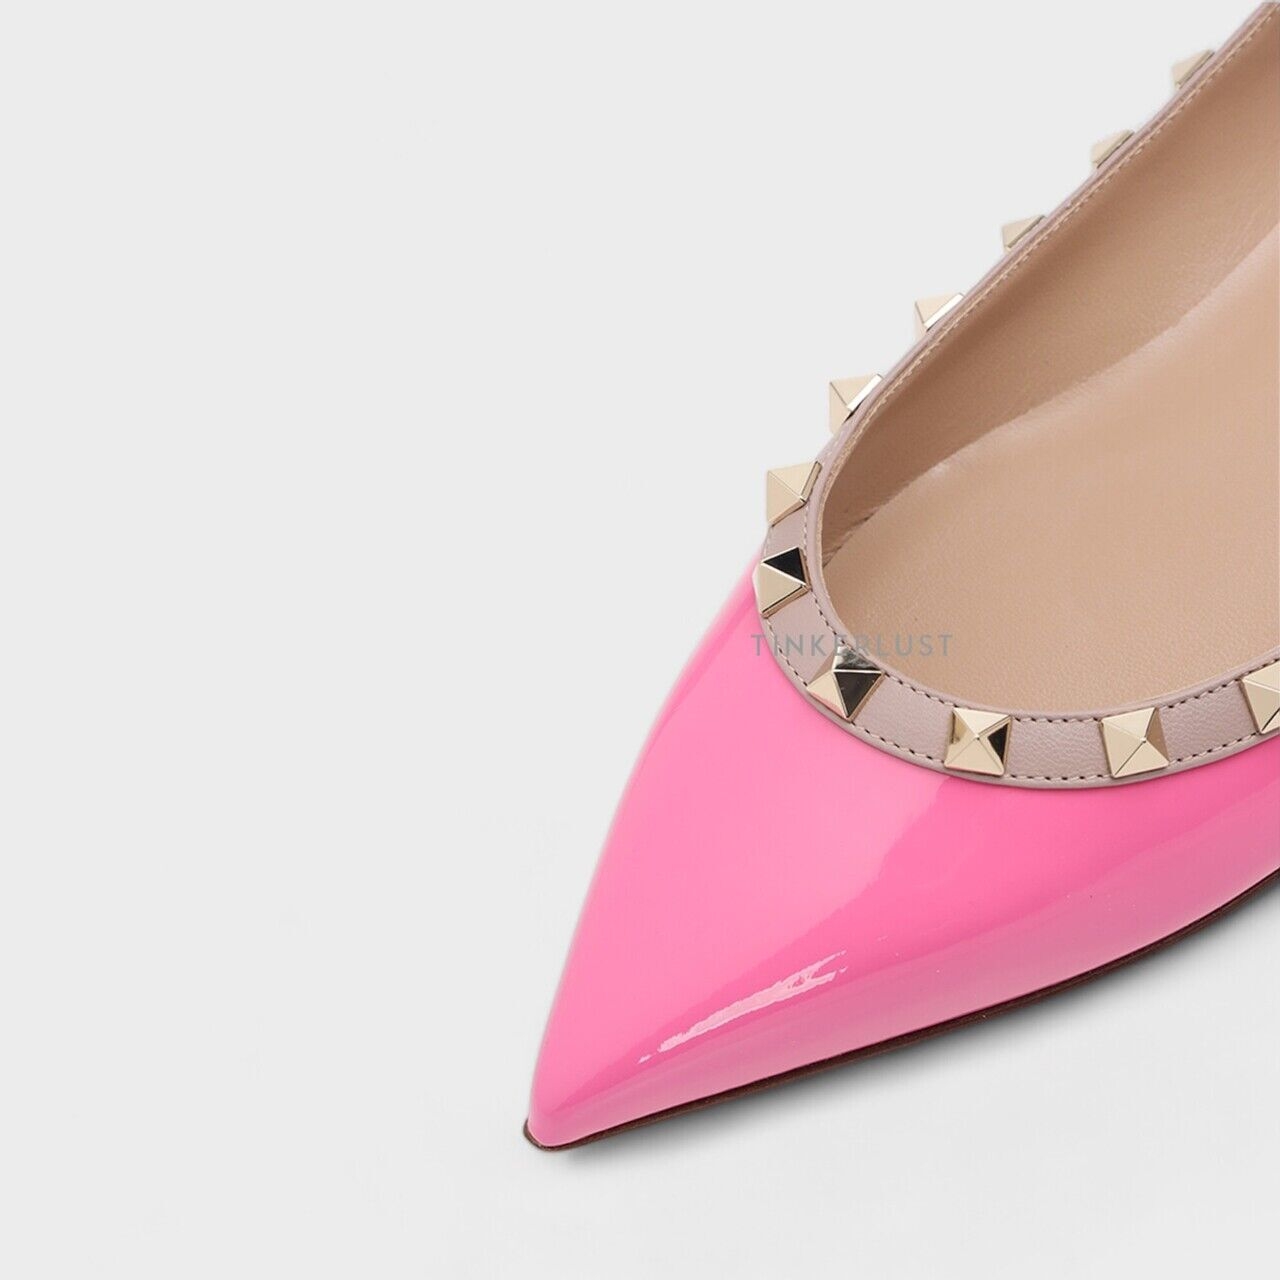 Valentino Garavani Rockstud Ballerina in Feminine Pink Patent Flats